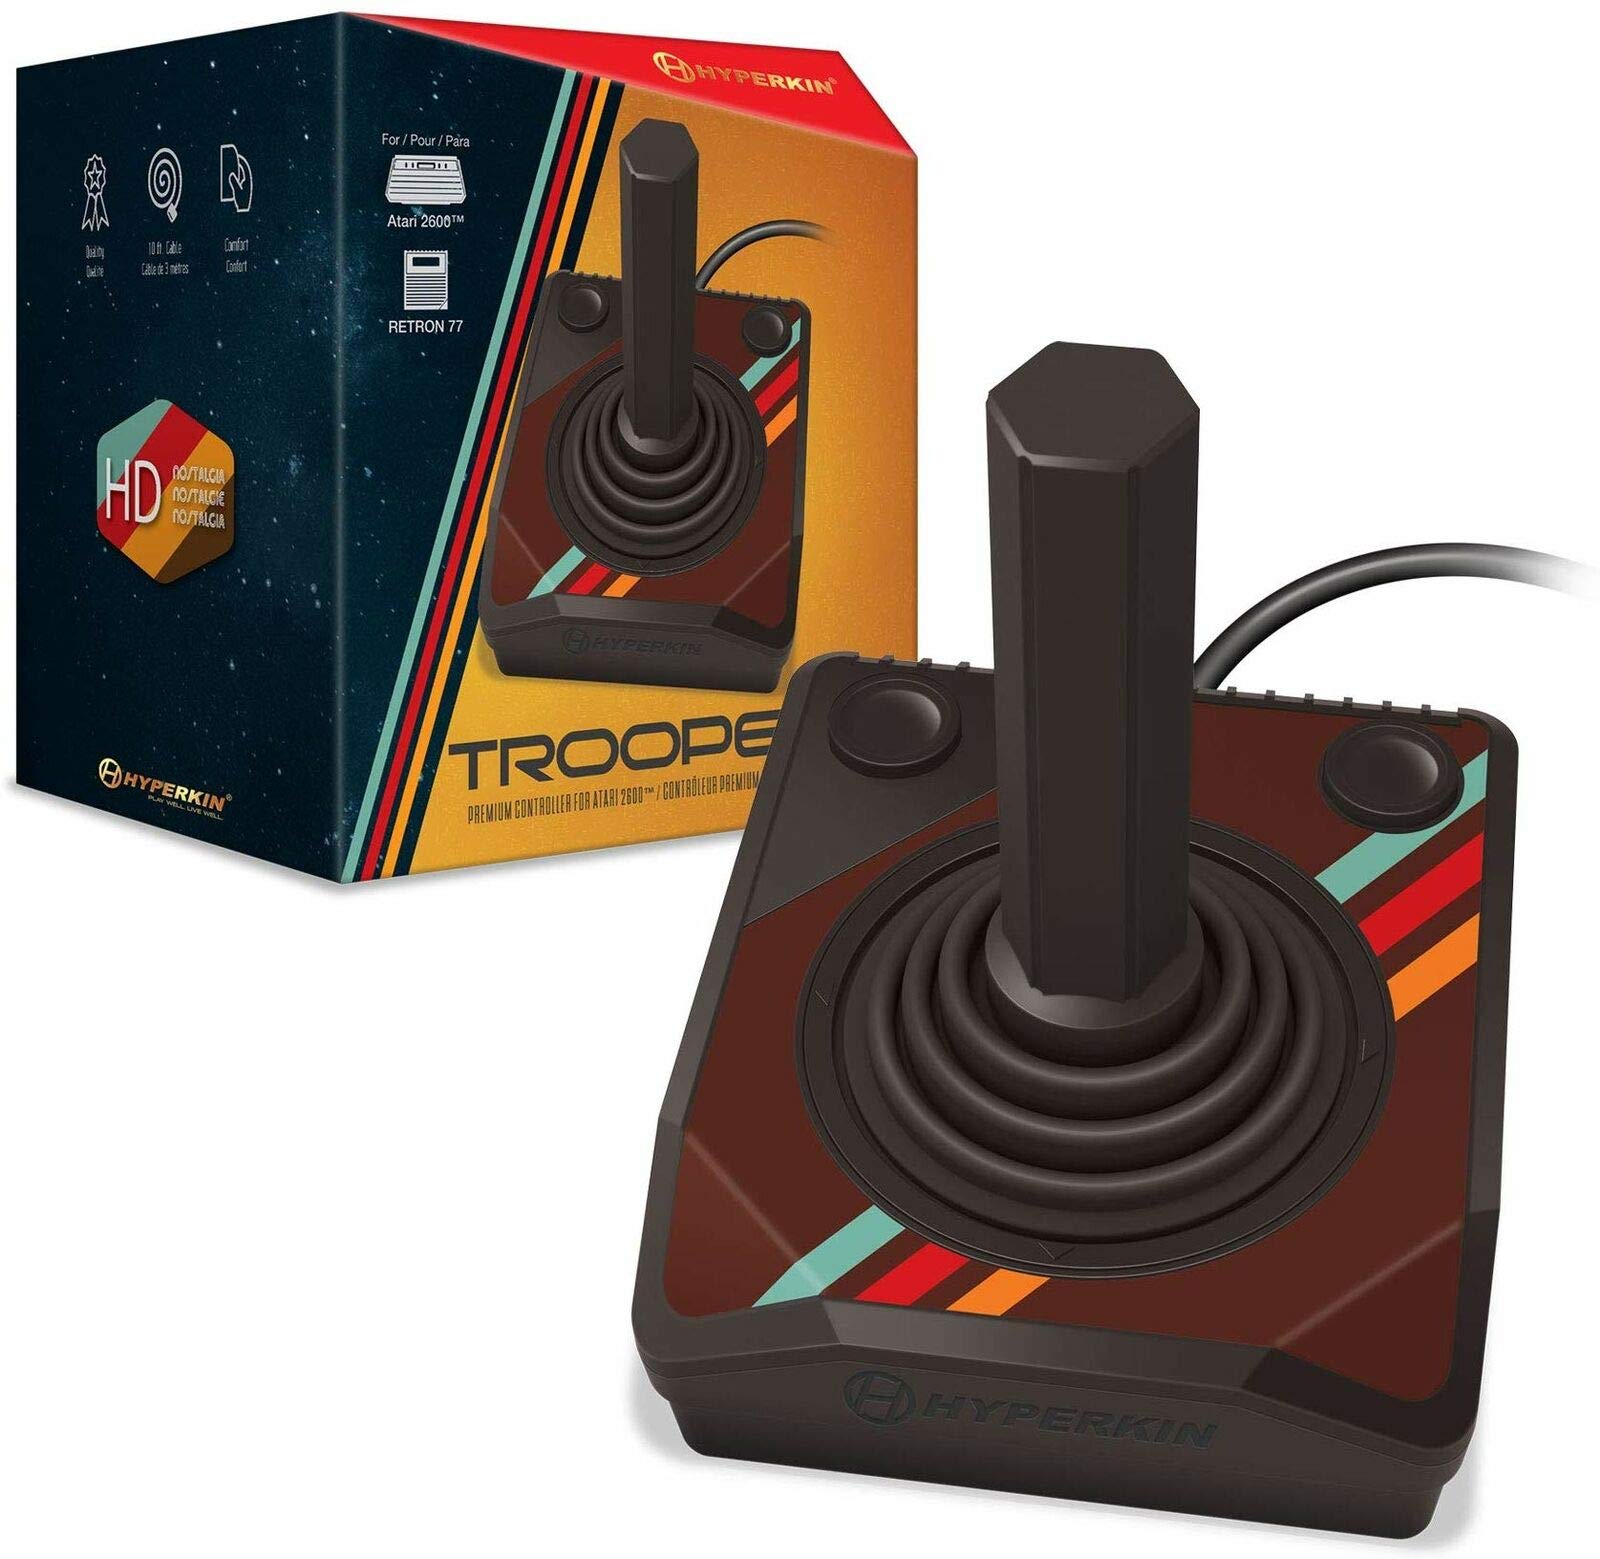 Hyperkin Retron 77 Atari 2600 HD Gaming Console with 2x Atari 2600 Premium Controllers + 2x Gamepad w/ Paddle Dial Controllers Bundle